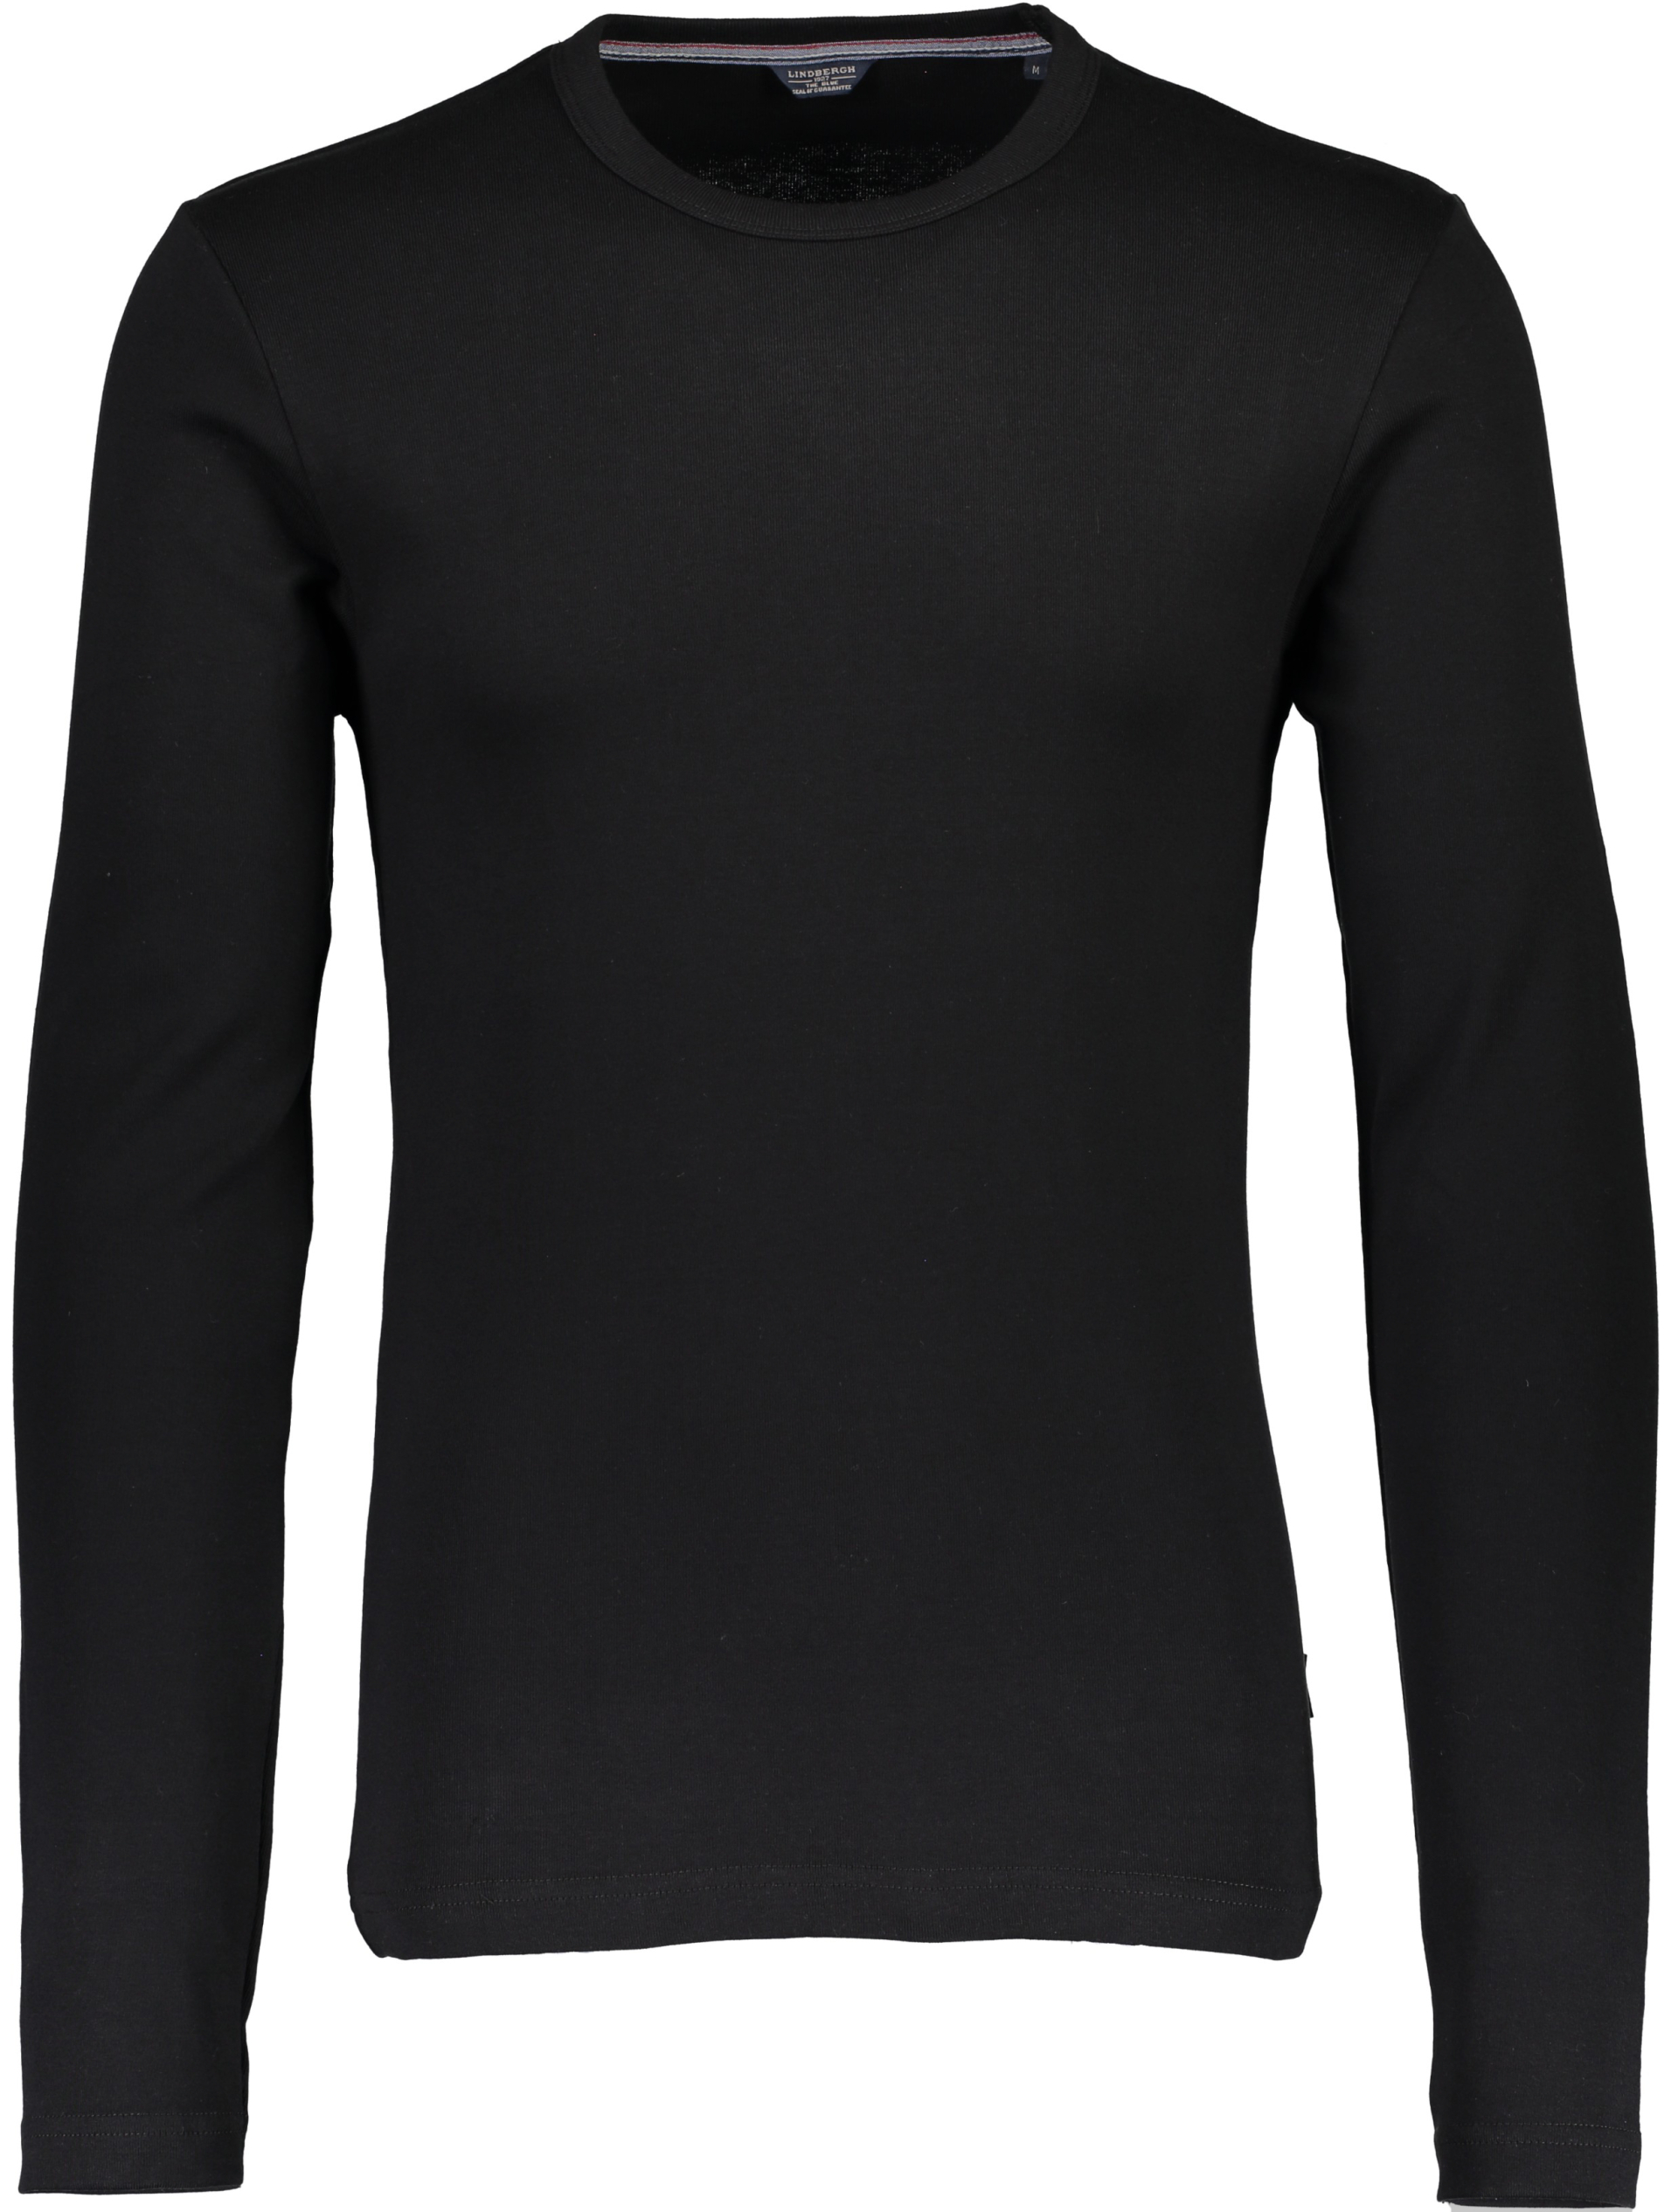 Lindbergh T-shirt svart / black